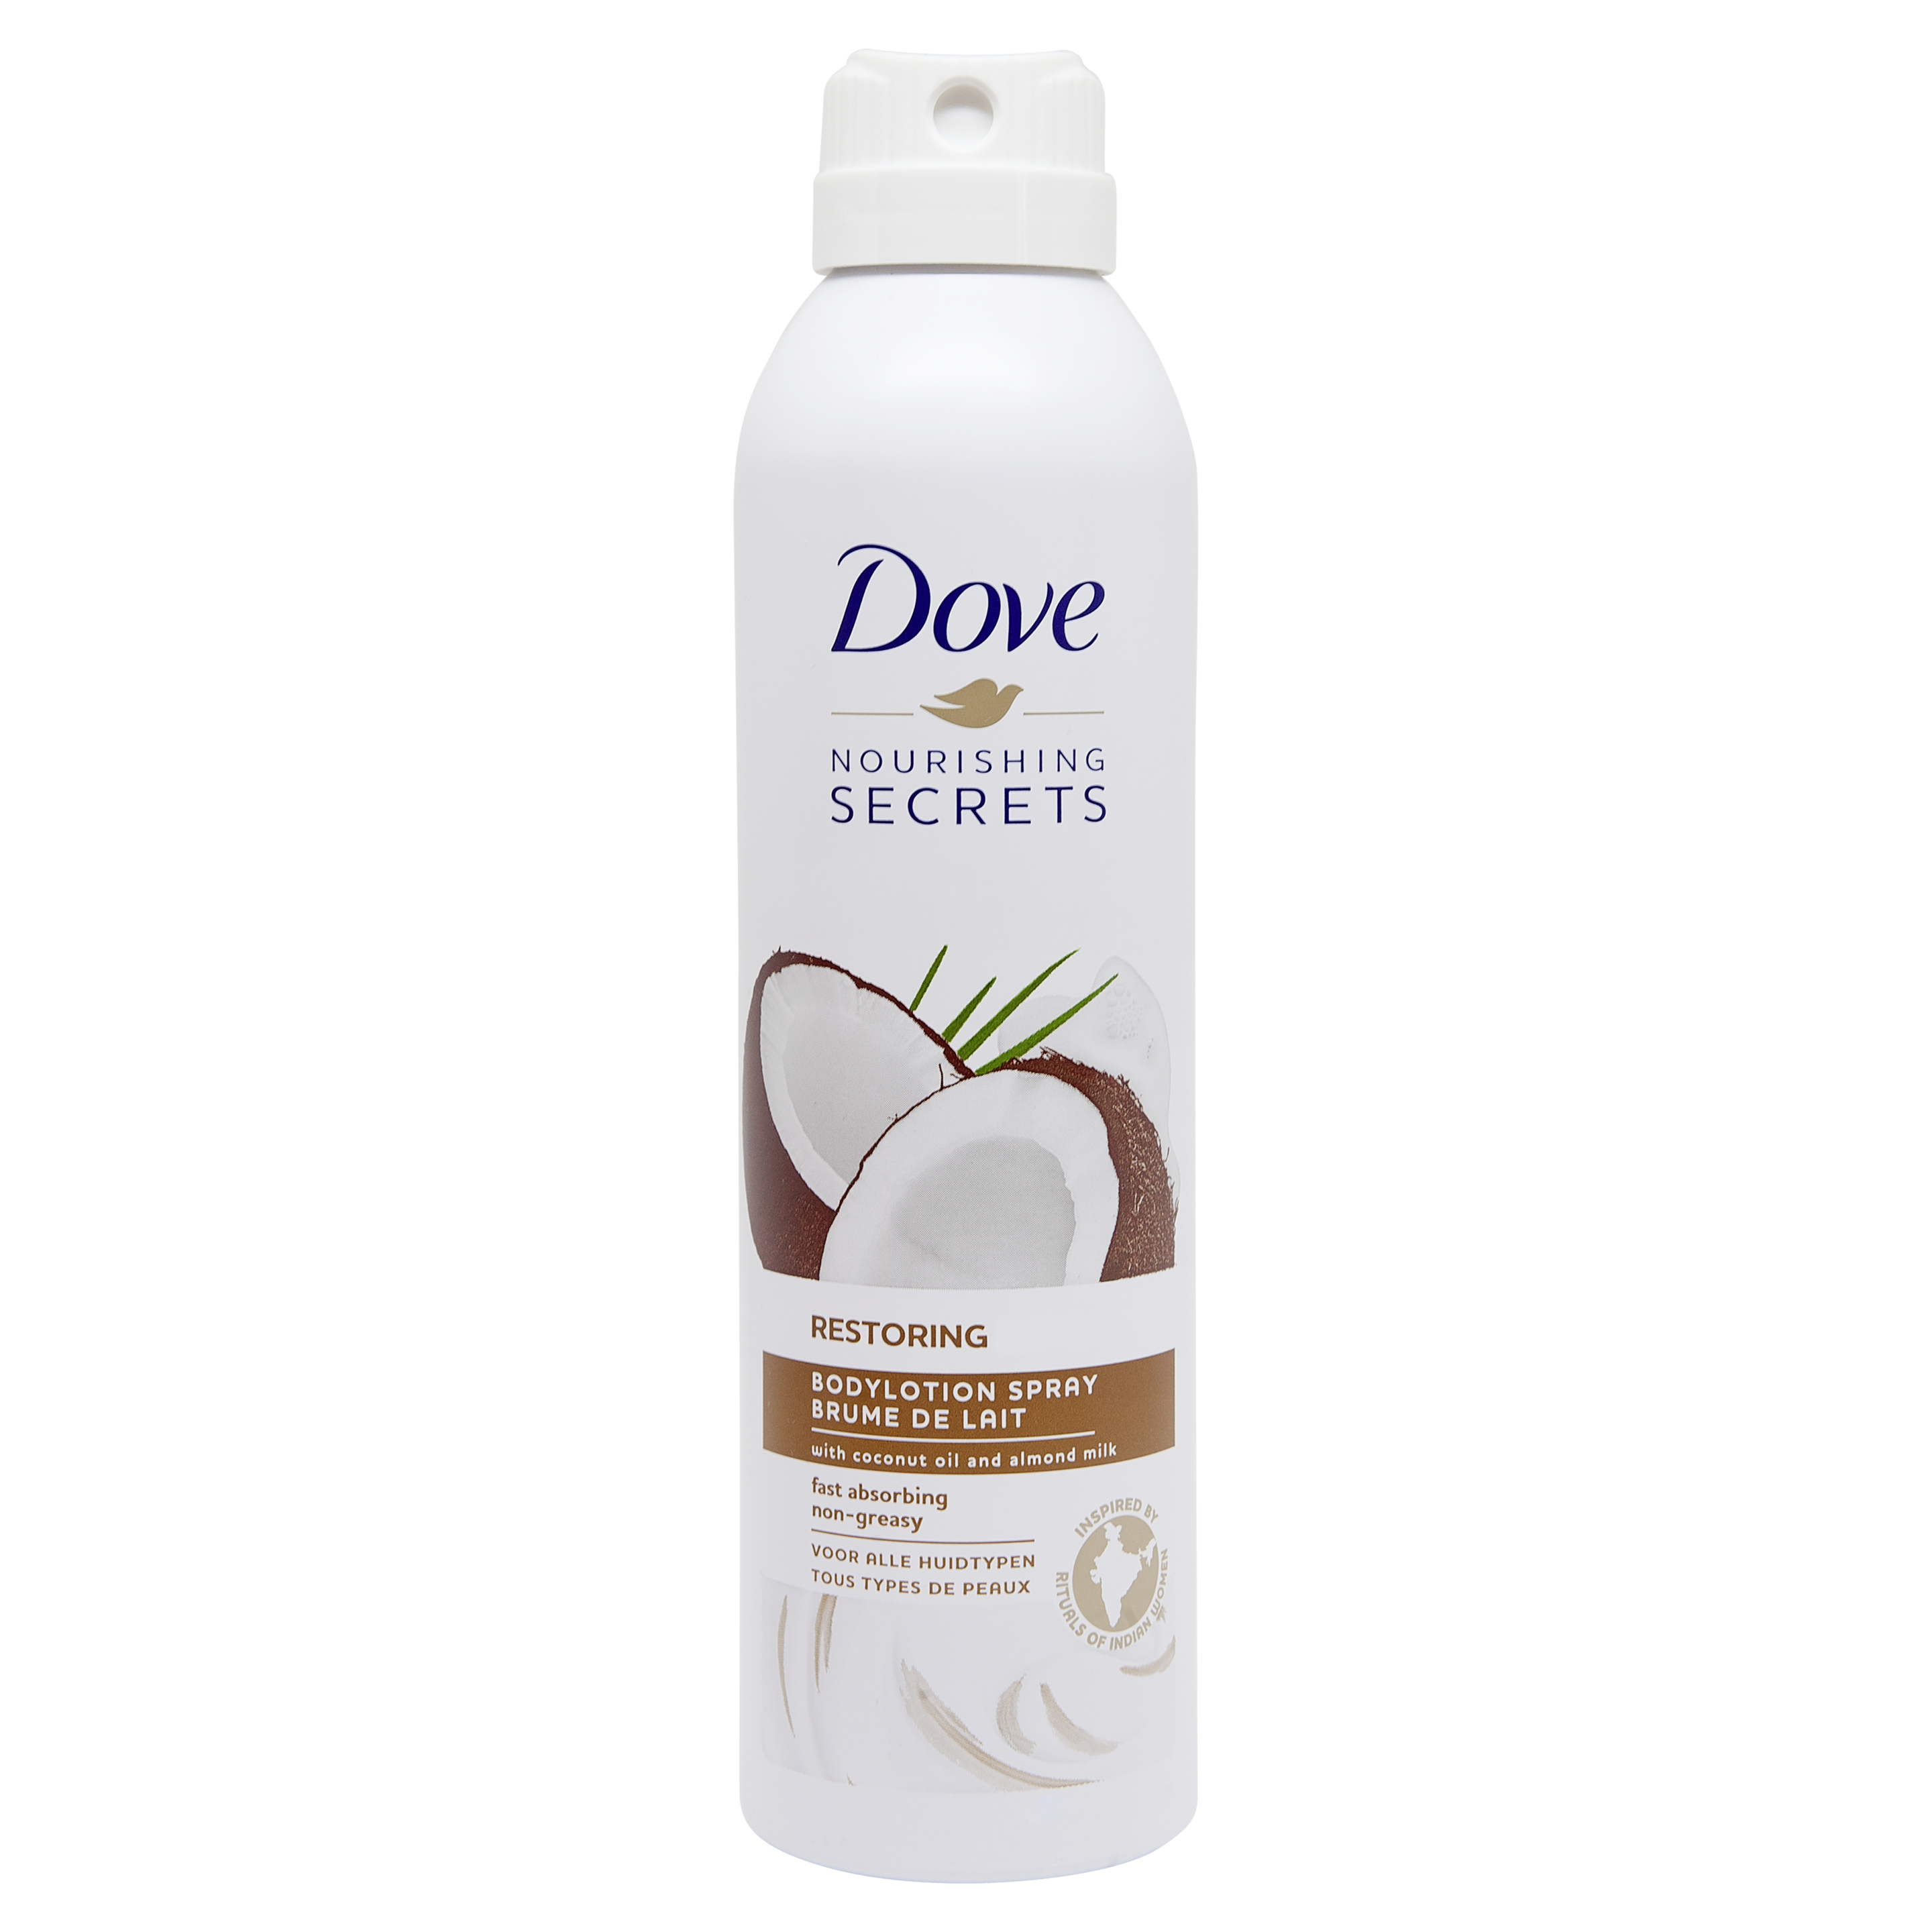 Dove Nourishing Secrets Restoring Ritual Spray pour le corps 190 ml